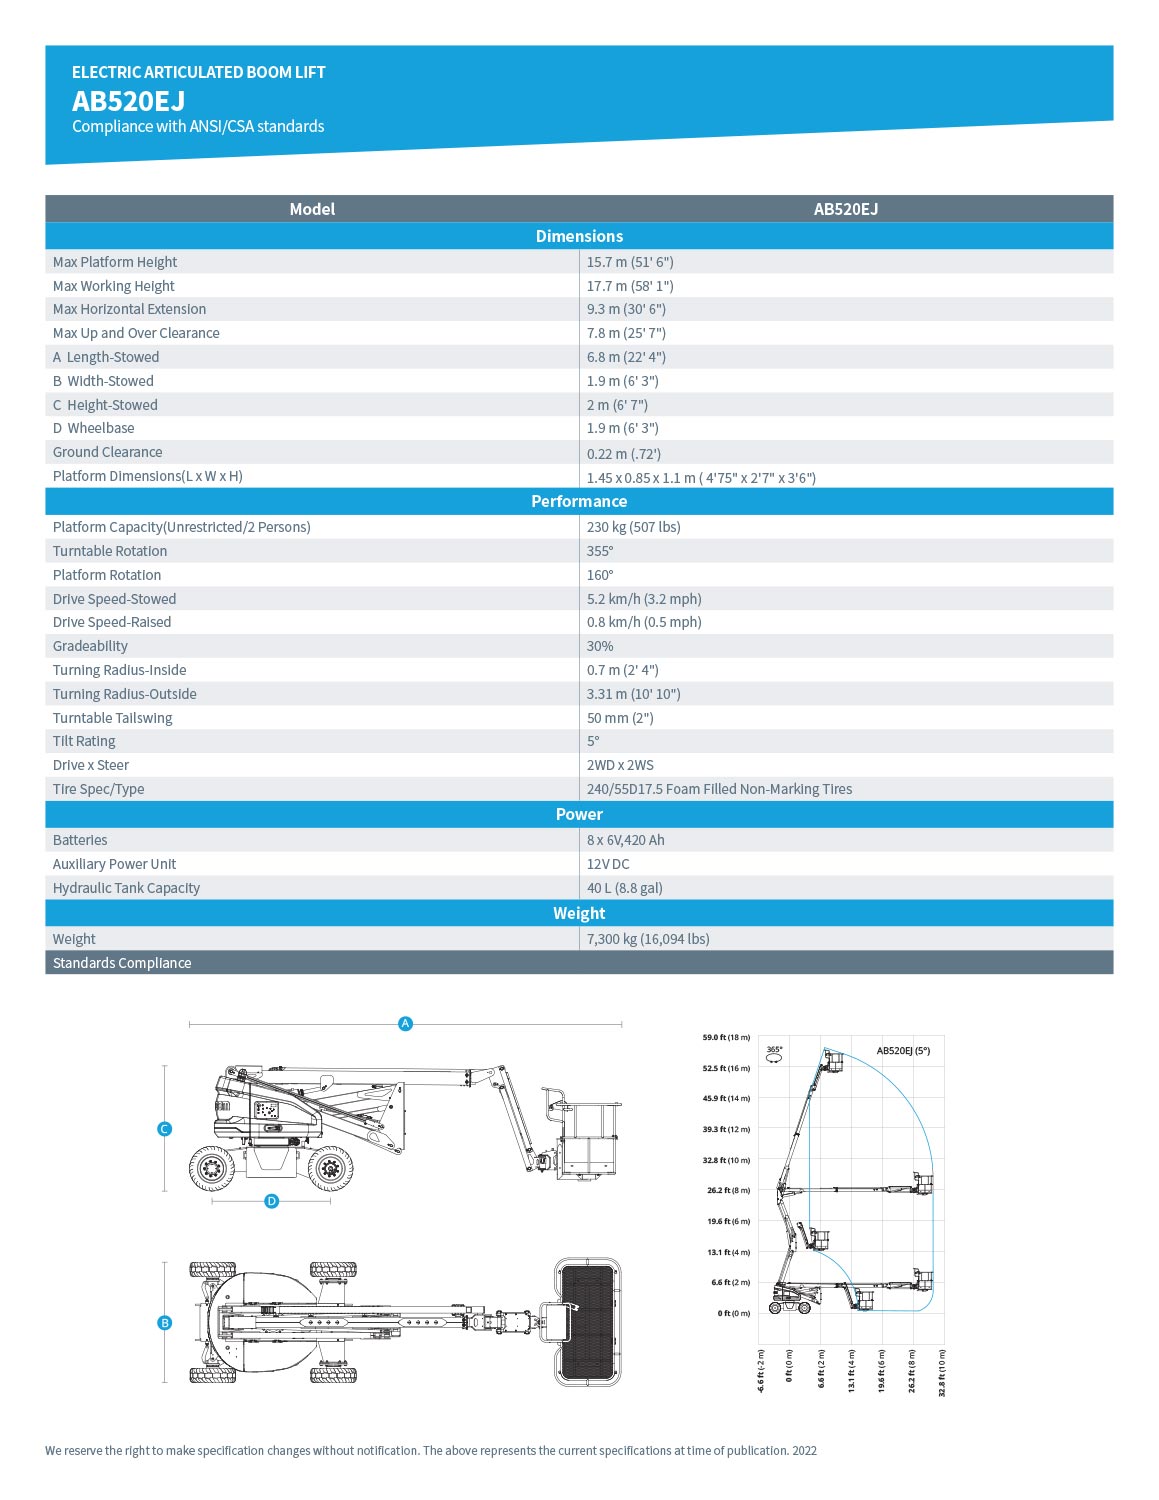 image of spec sheet for sinoboom artoculating lift